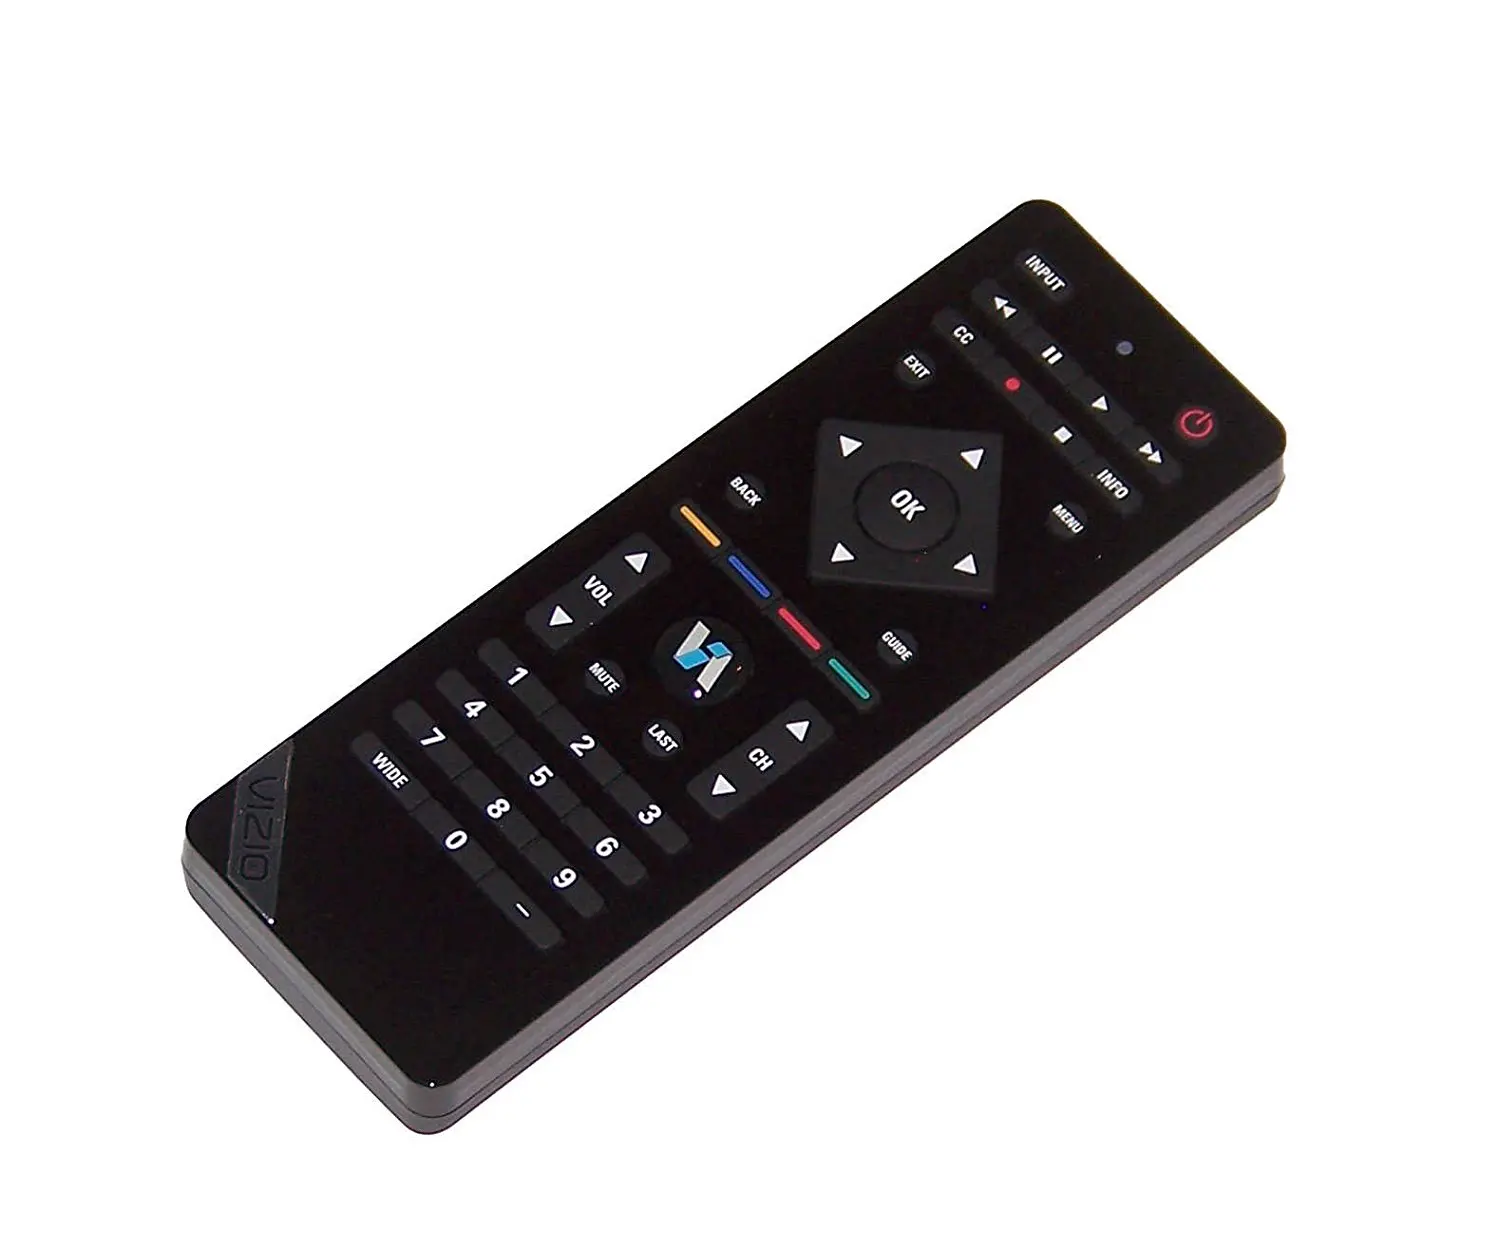 Buy OEM Vizio Remote Control: - Read Description - SV420XVT, SV420XVT1A